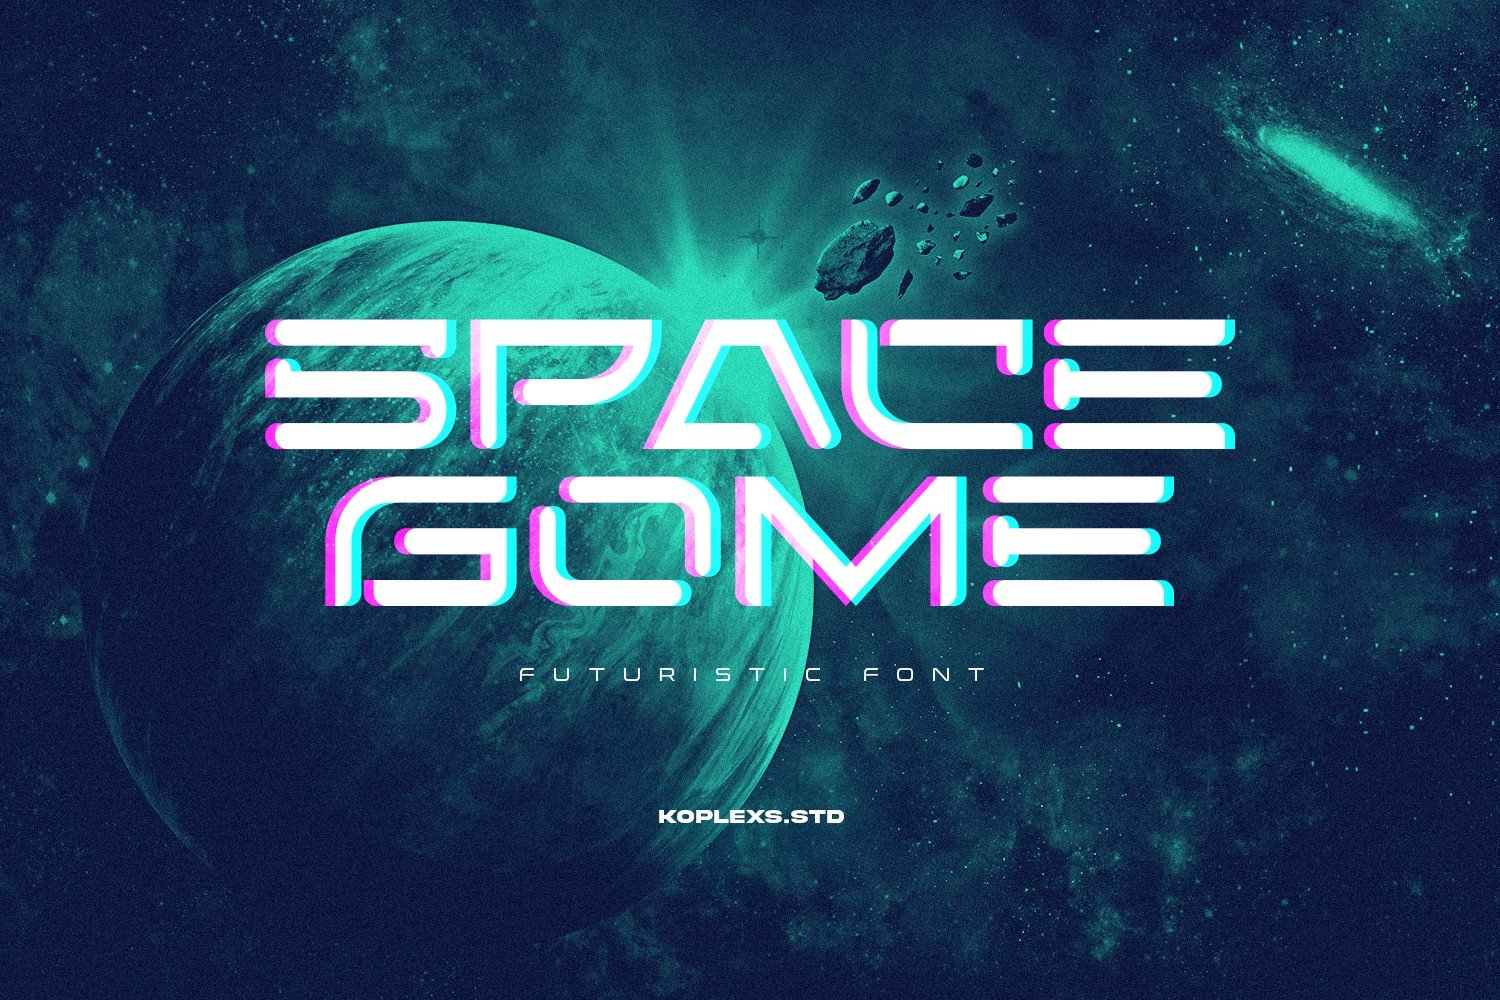 Space Gome - Futuristic Display Font cover image.